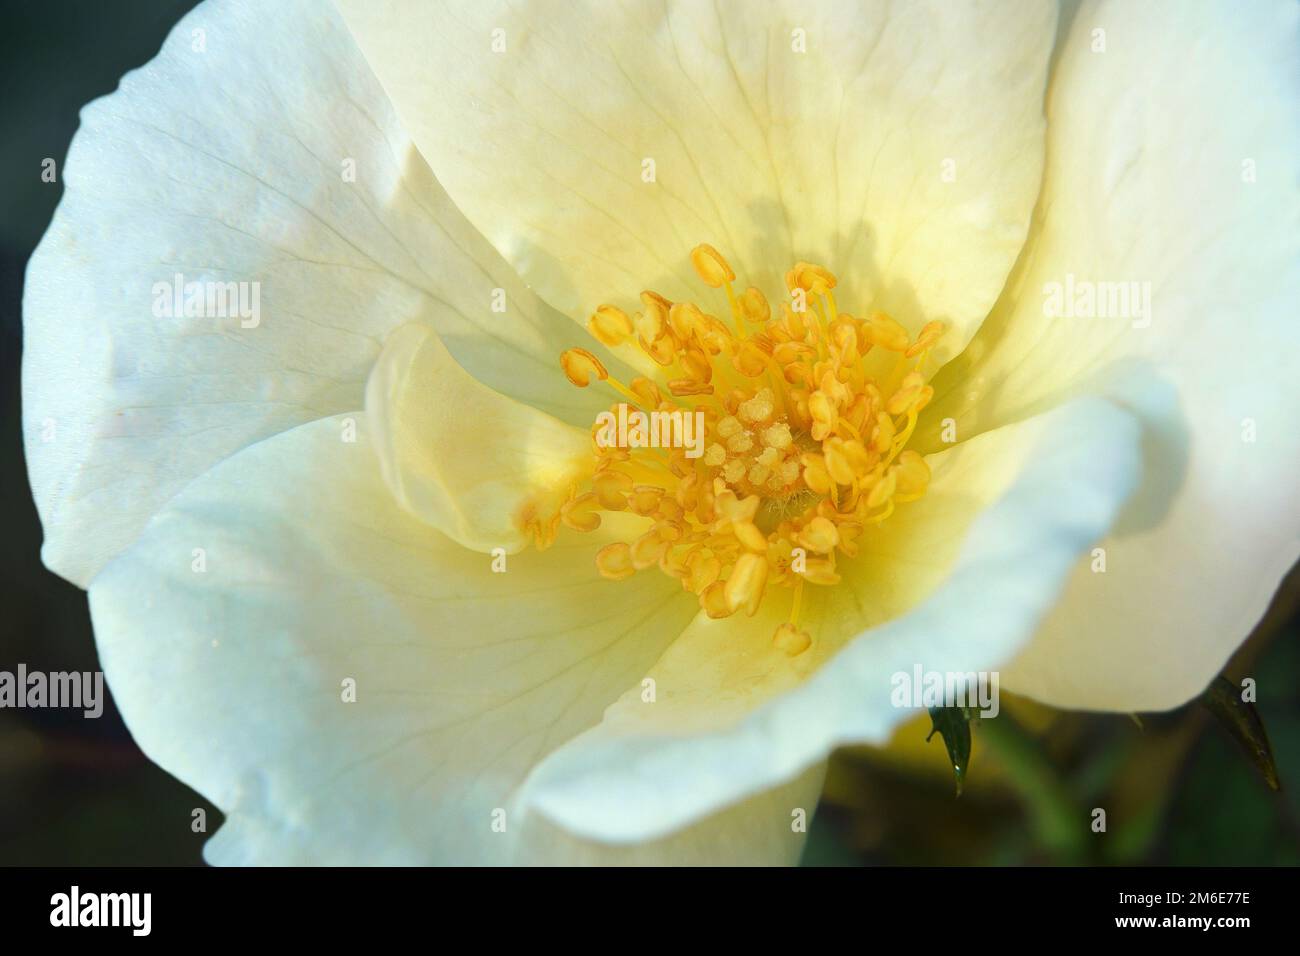 Close up image of Memorial rose flower (Rosa wichuraiana) Stock Photo